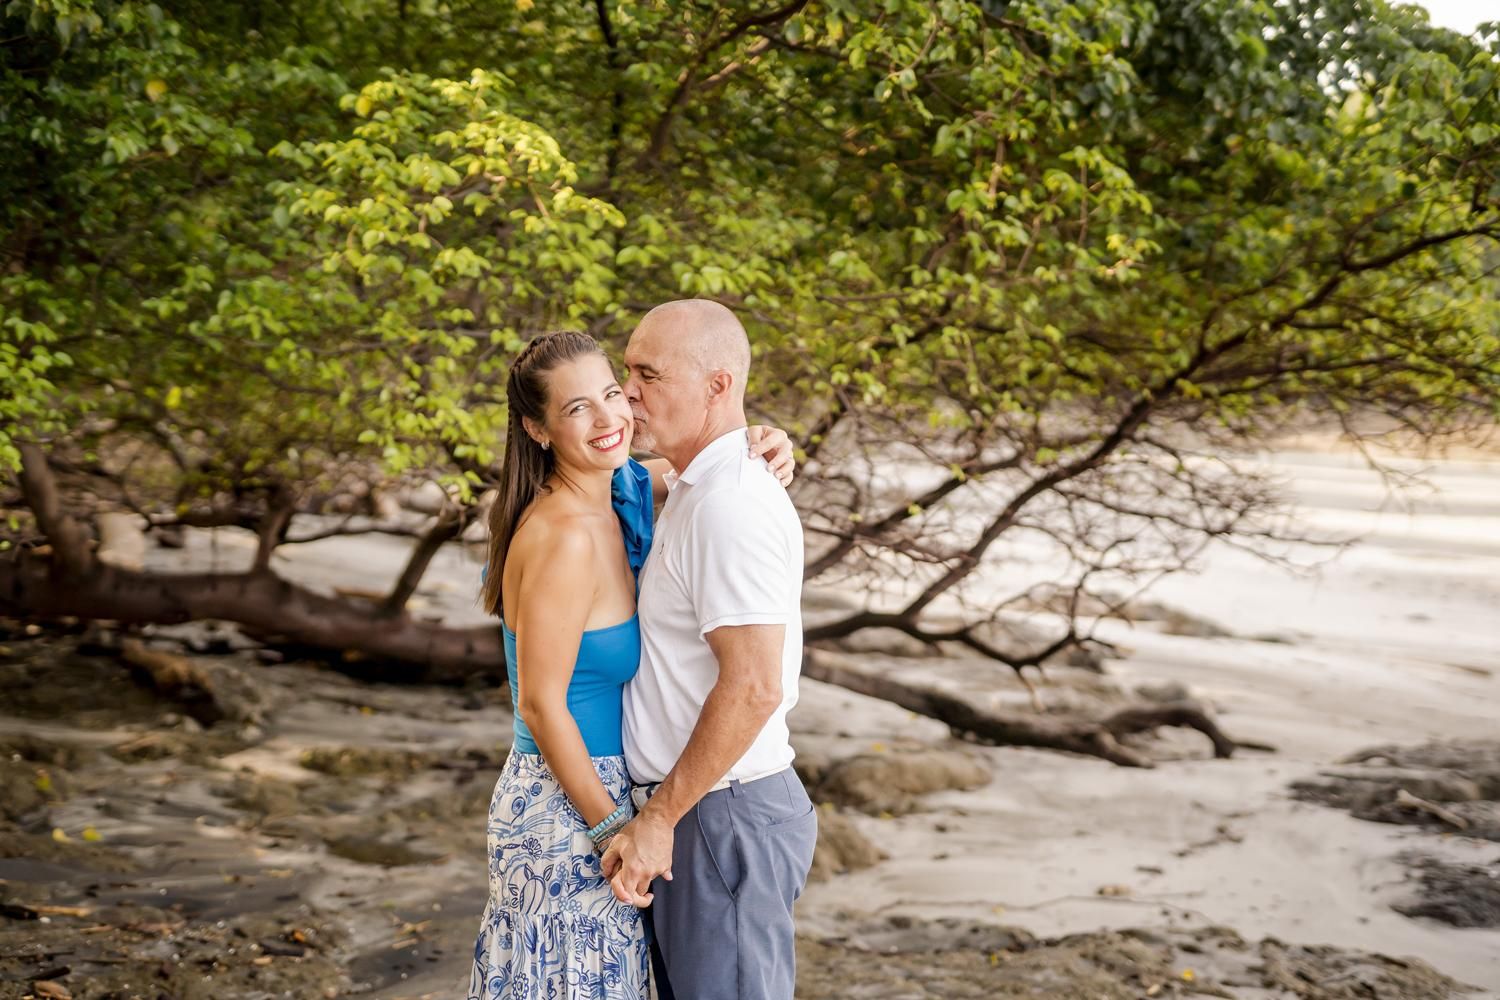 Alexandra and her husband Bill in Costa Rica